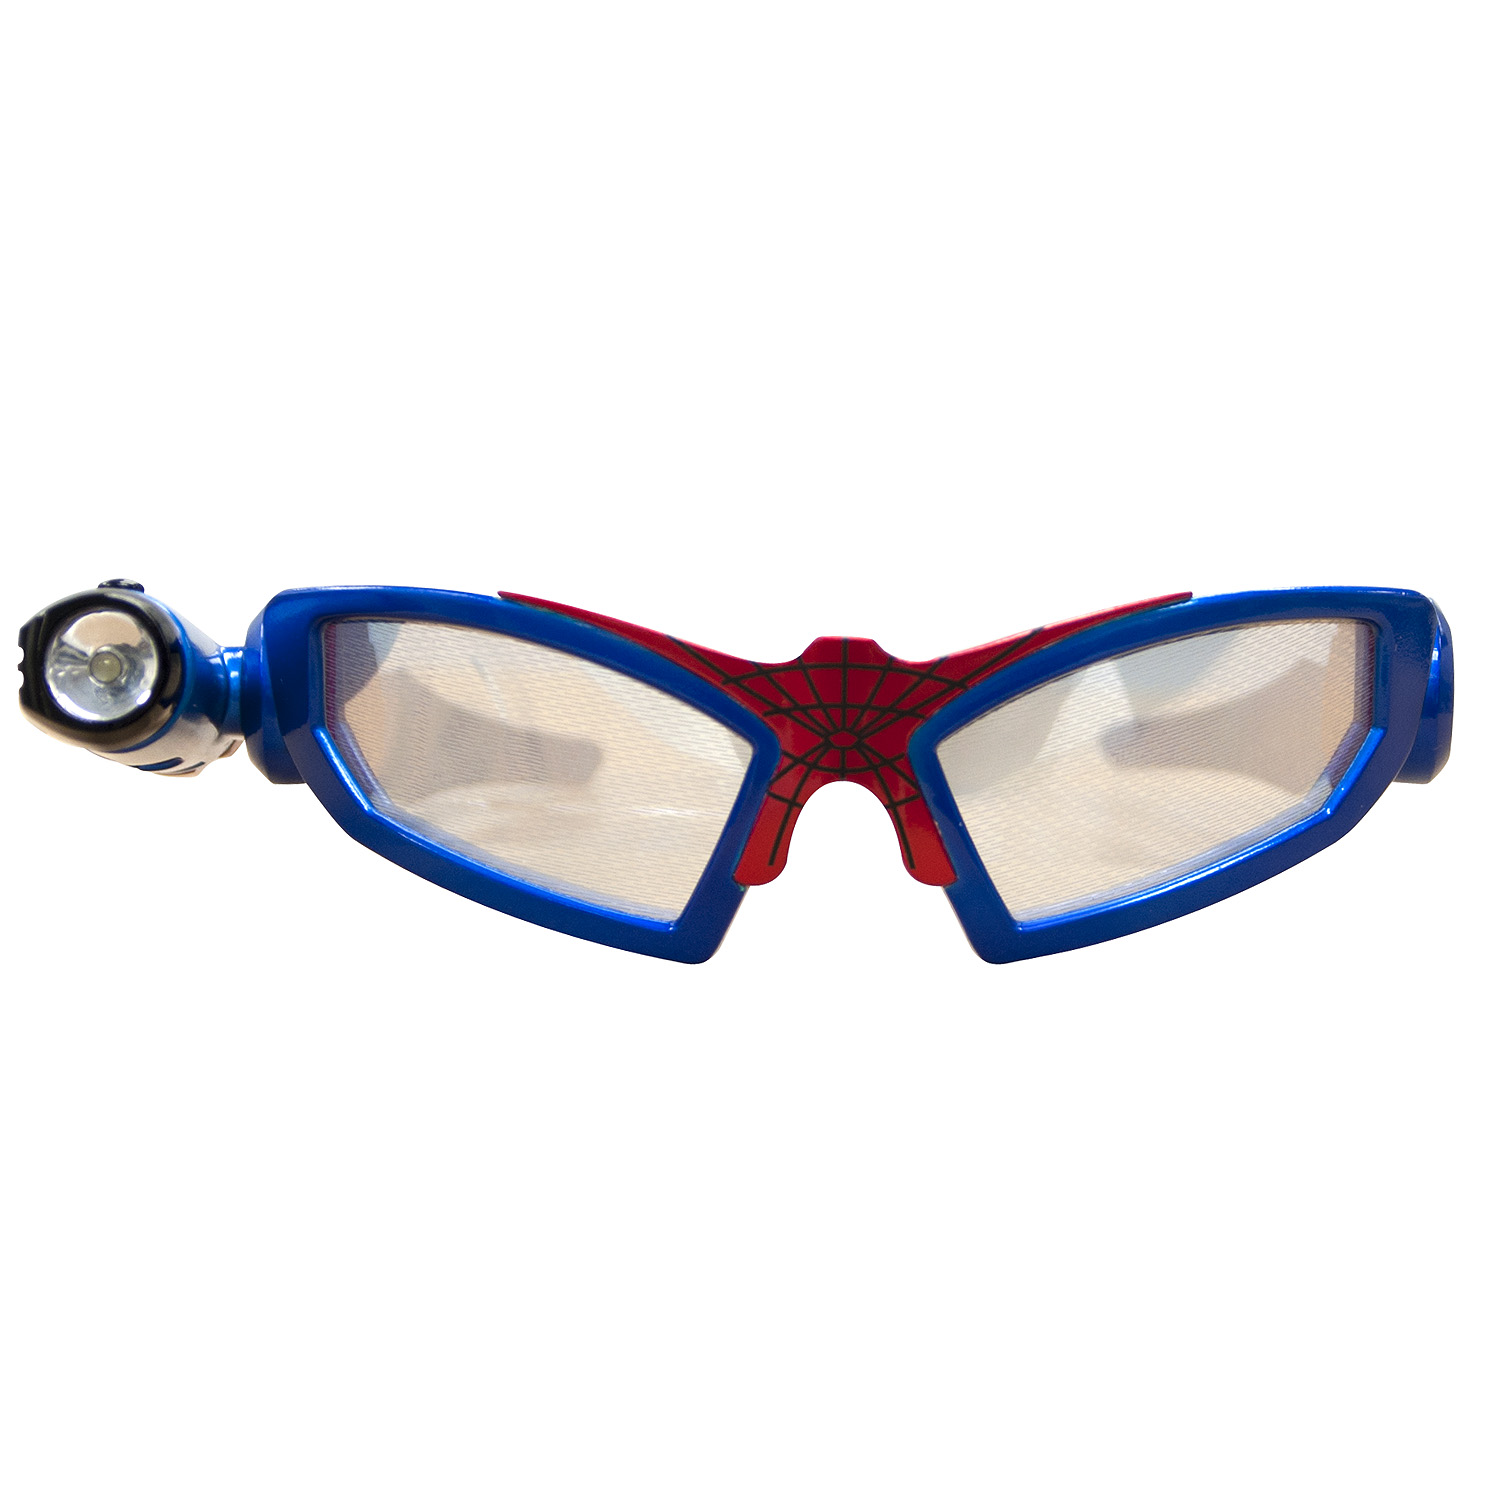 Tech 4 Kids Inc. Spider-Man Lite Vision Glasses